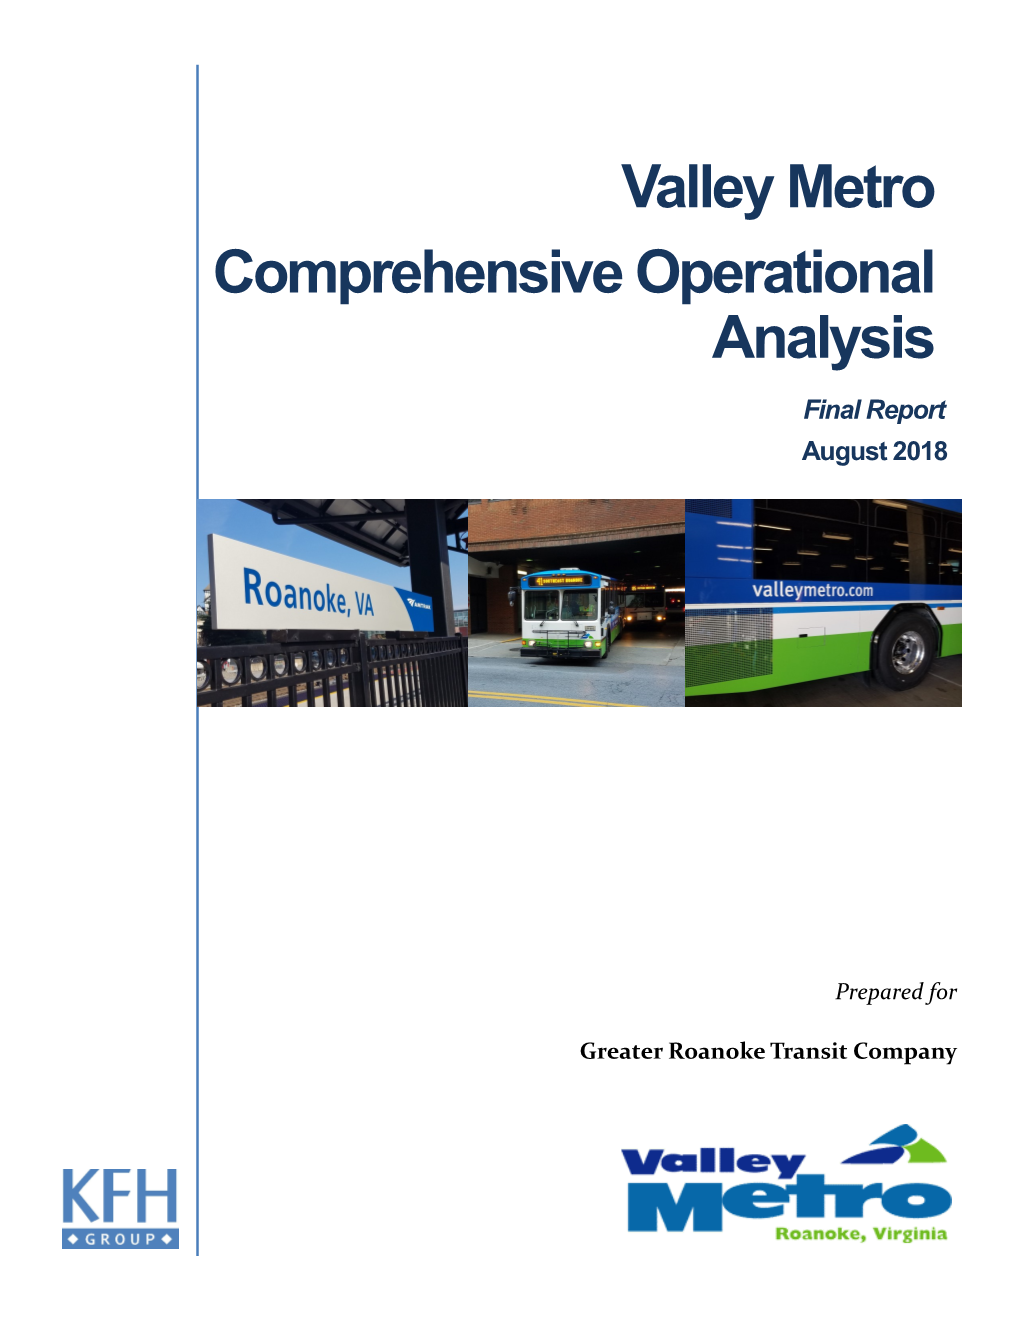 Valley Metro Comprehensive Operational Analysis